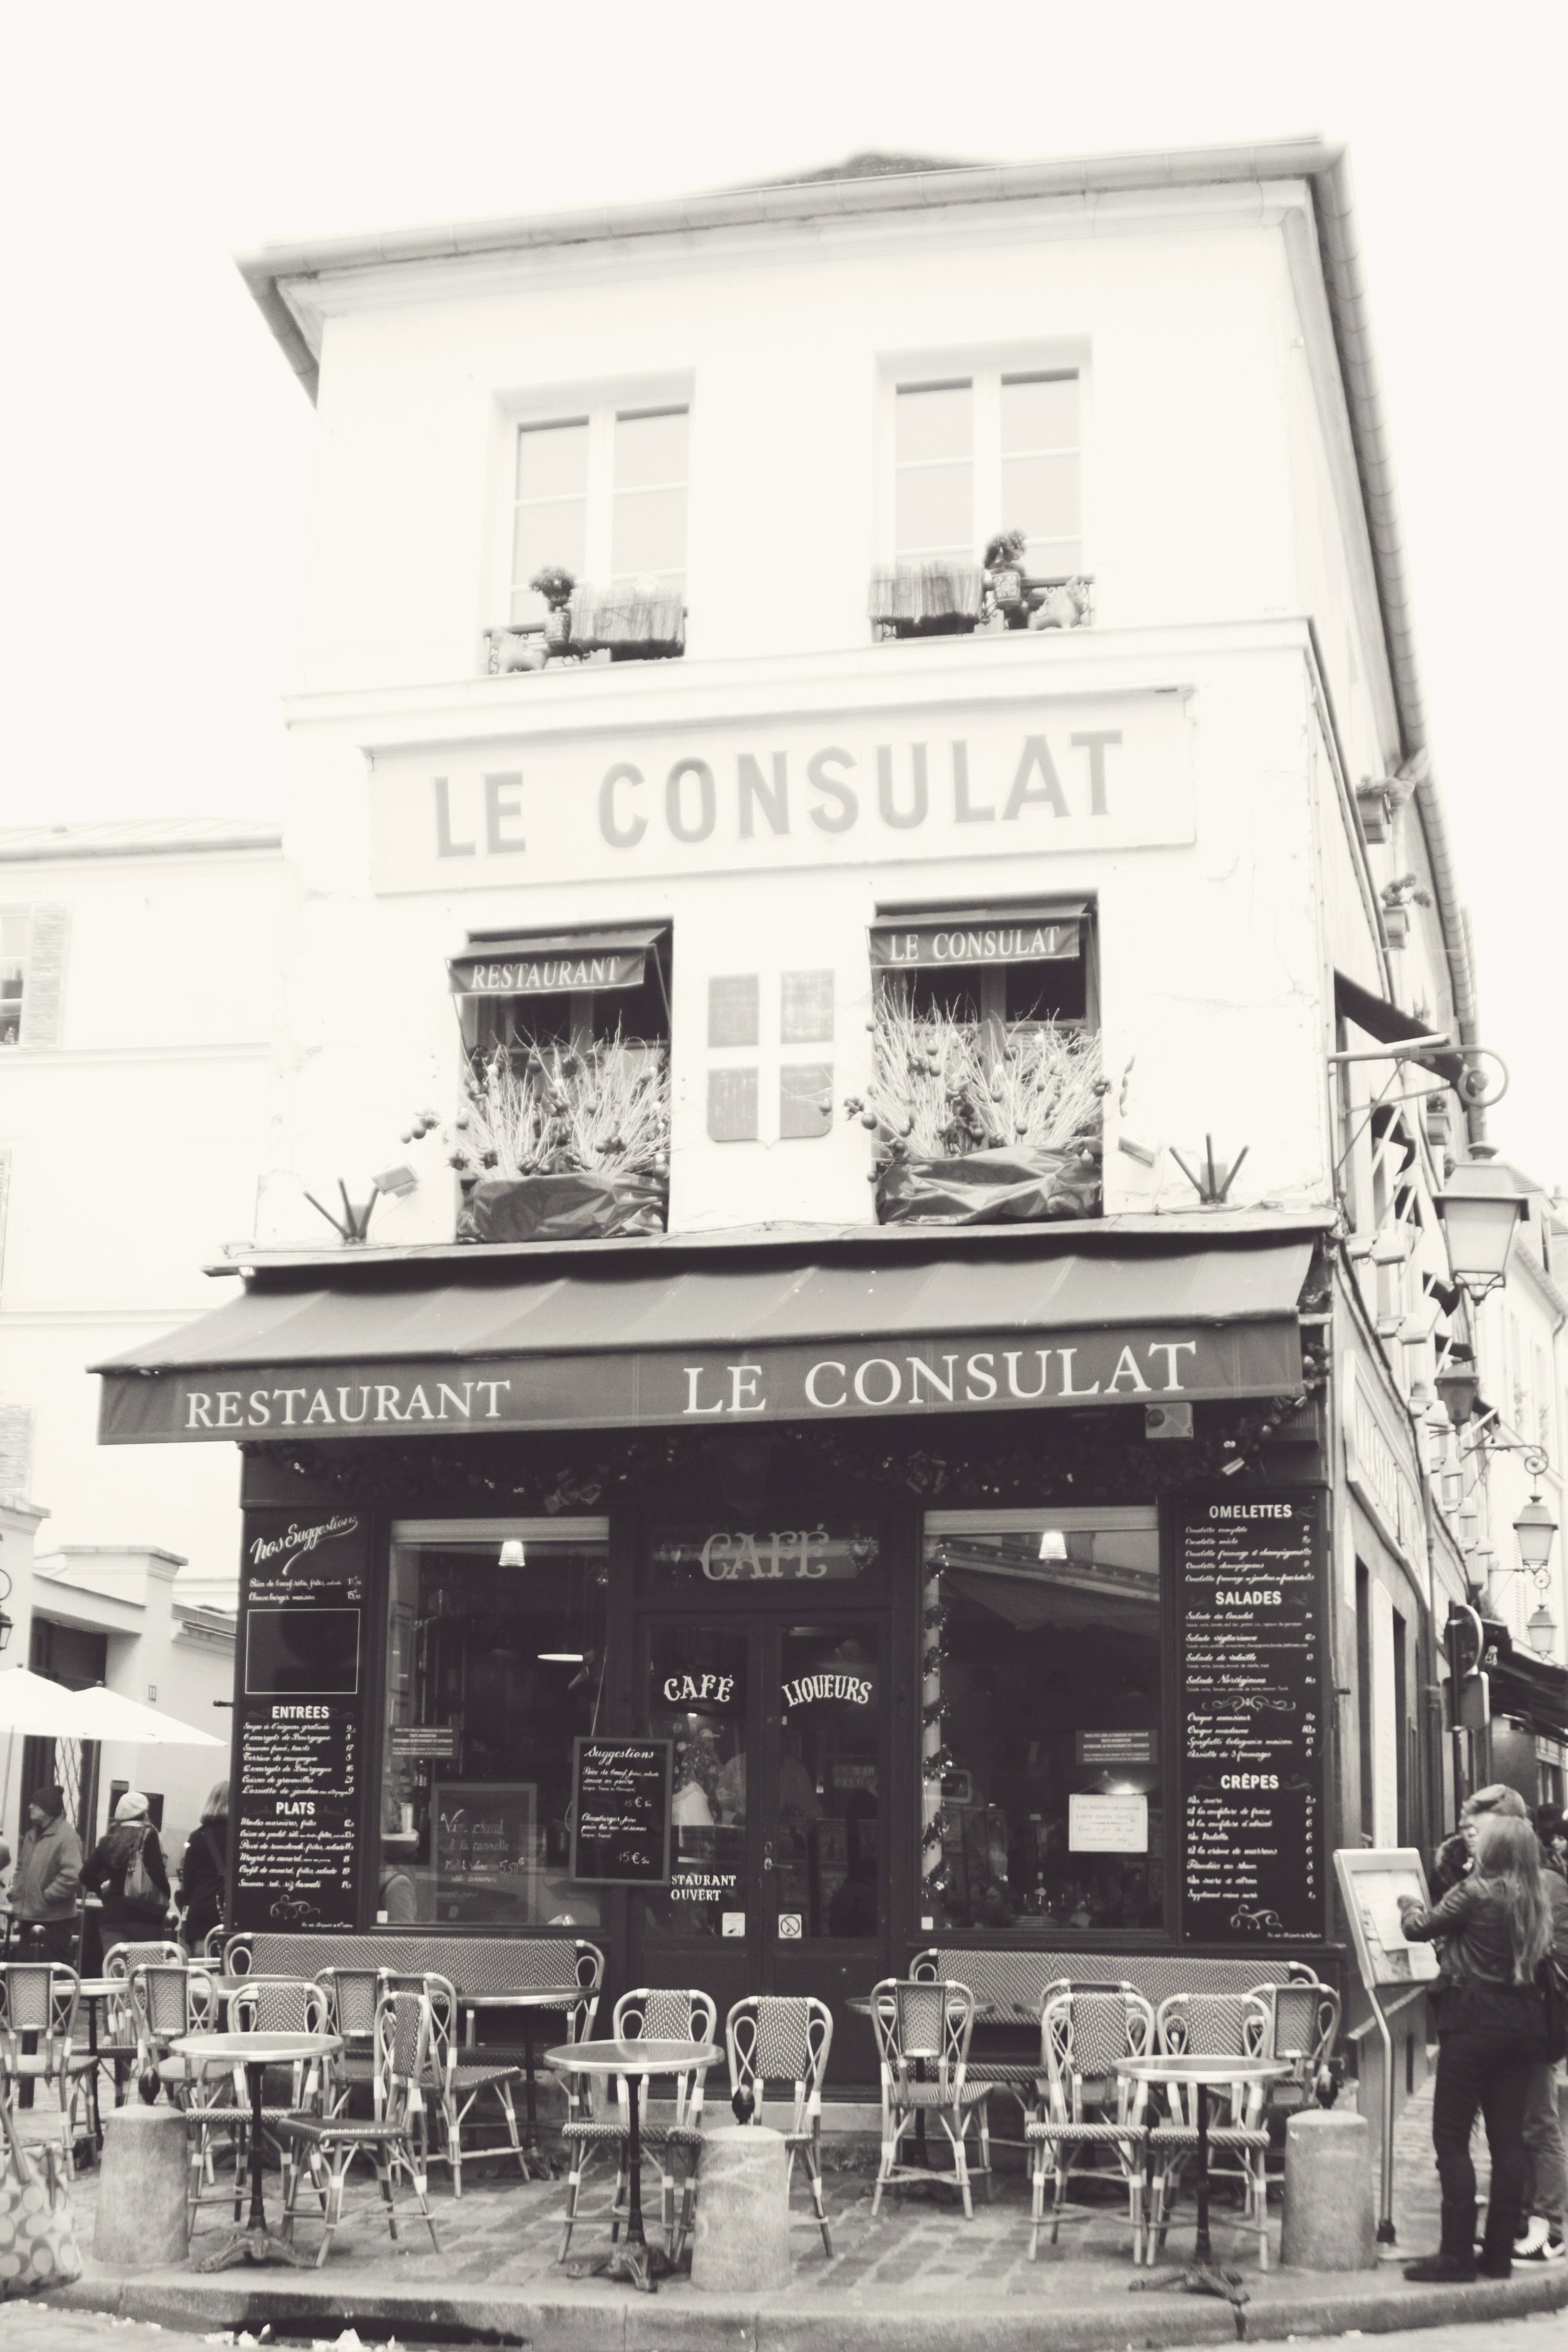 Le Consulat in Montmartre